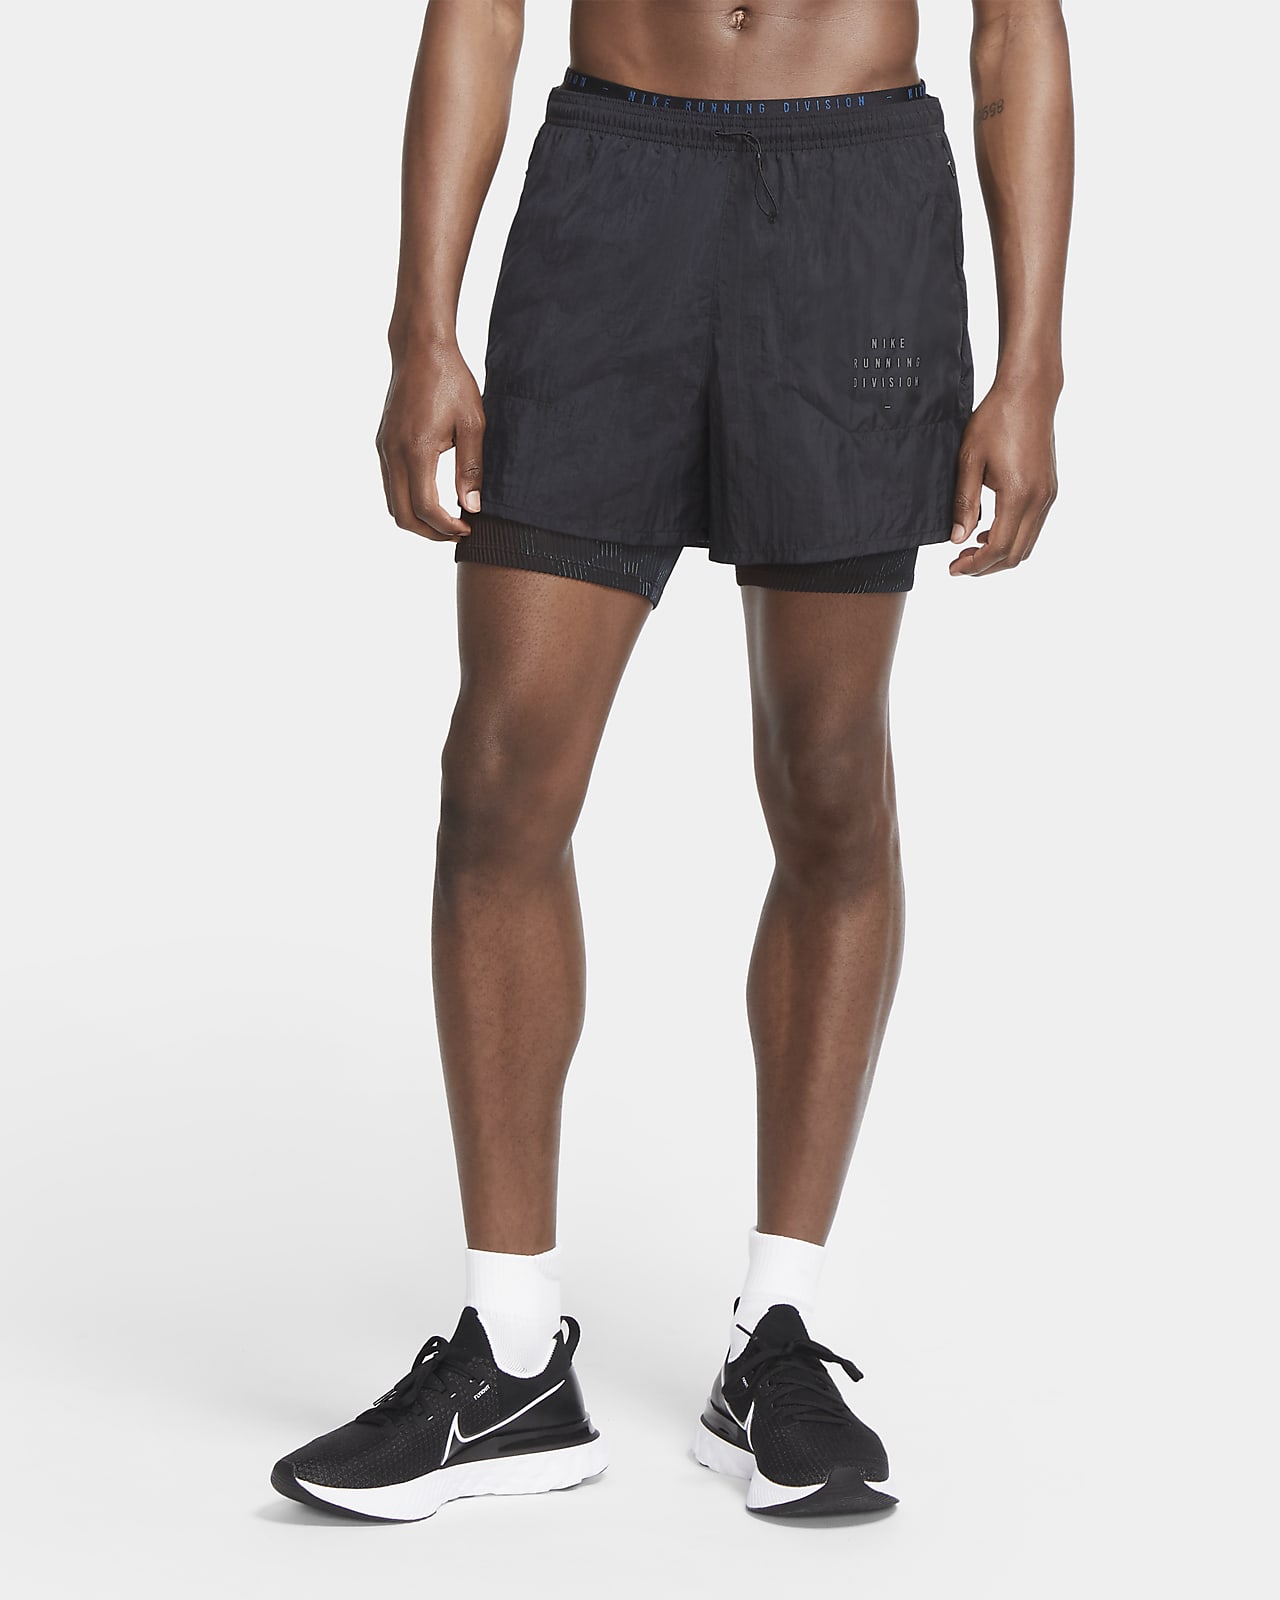 mens nike running shorts sale